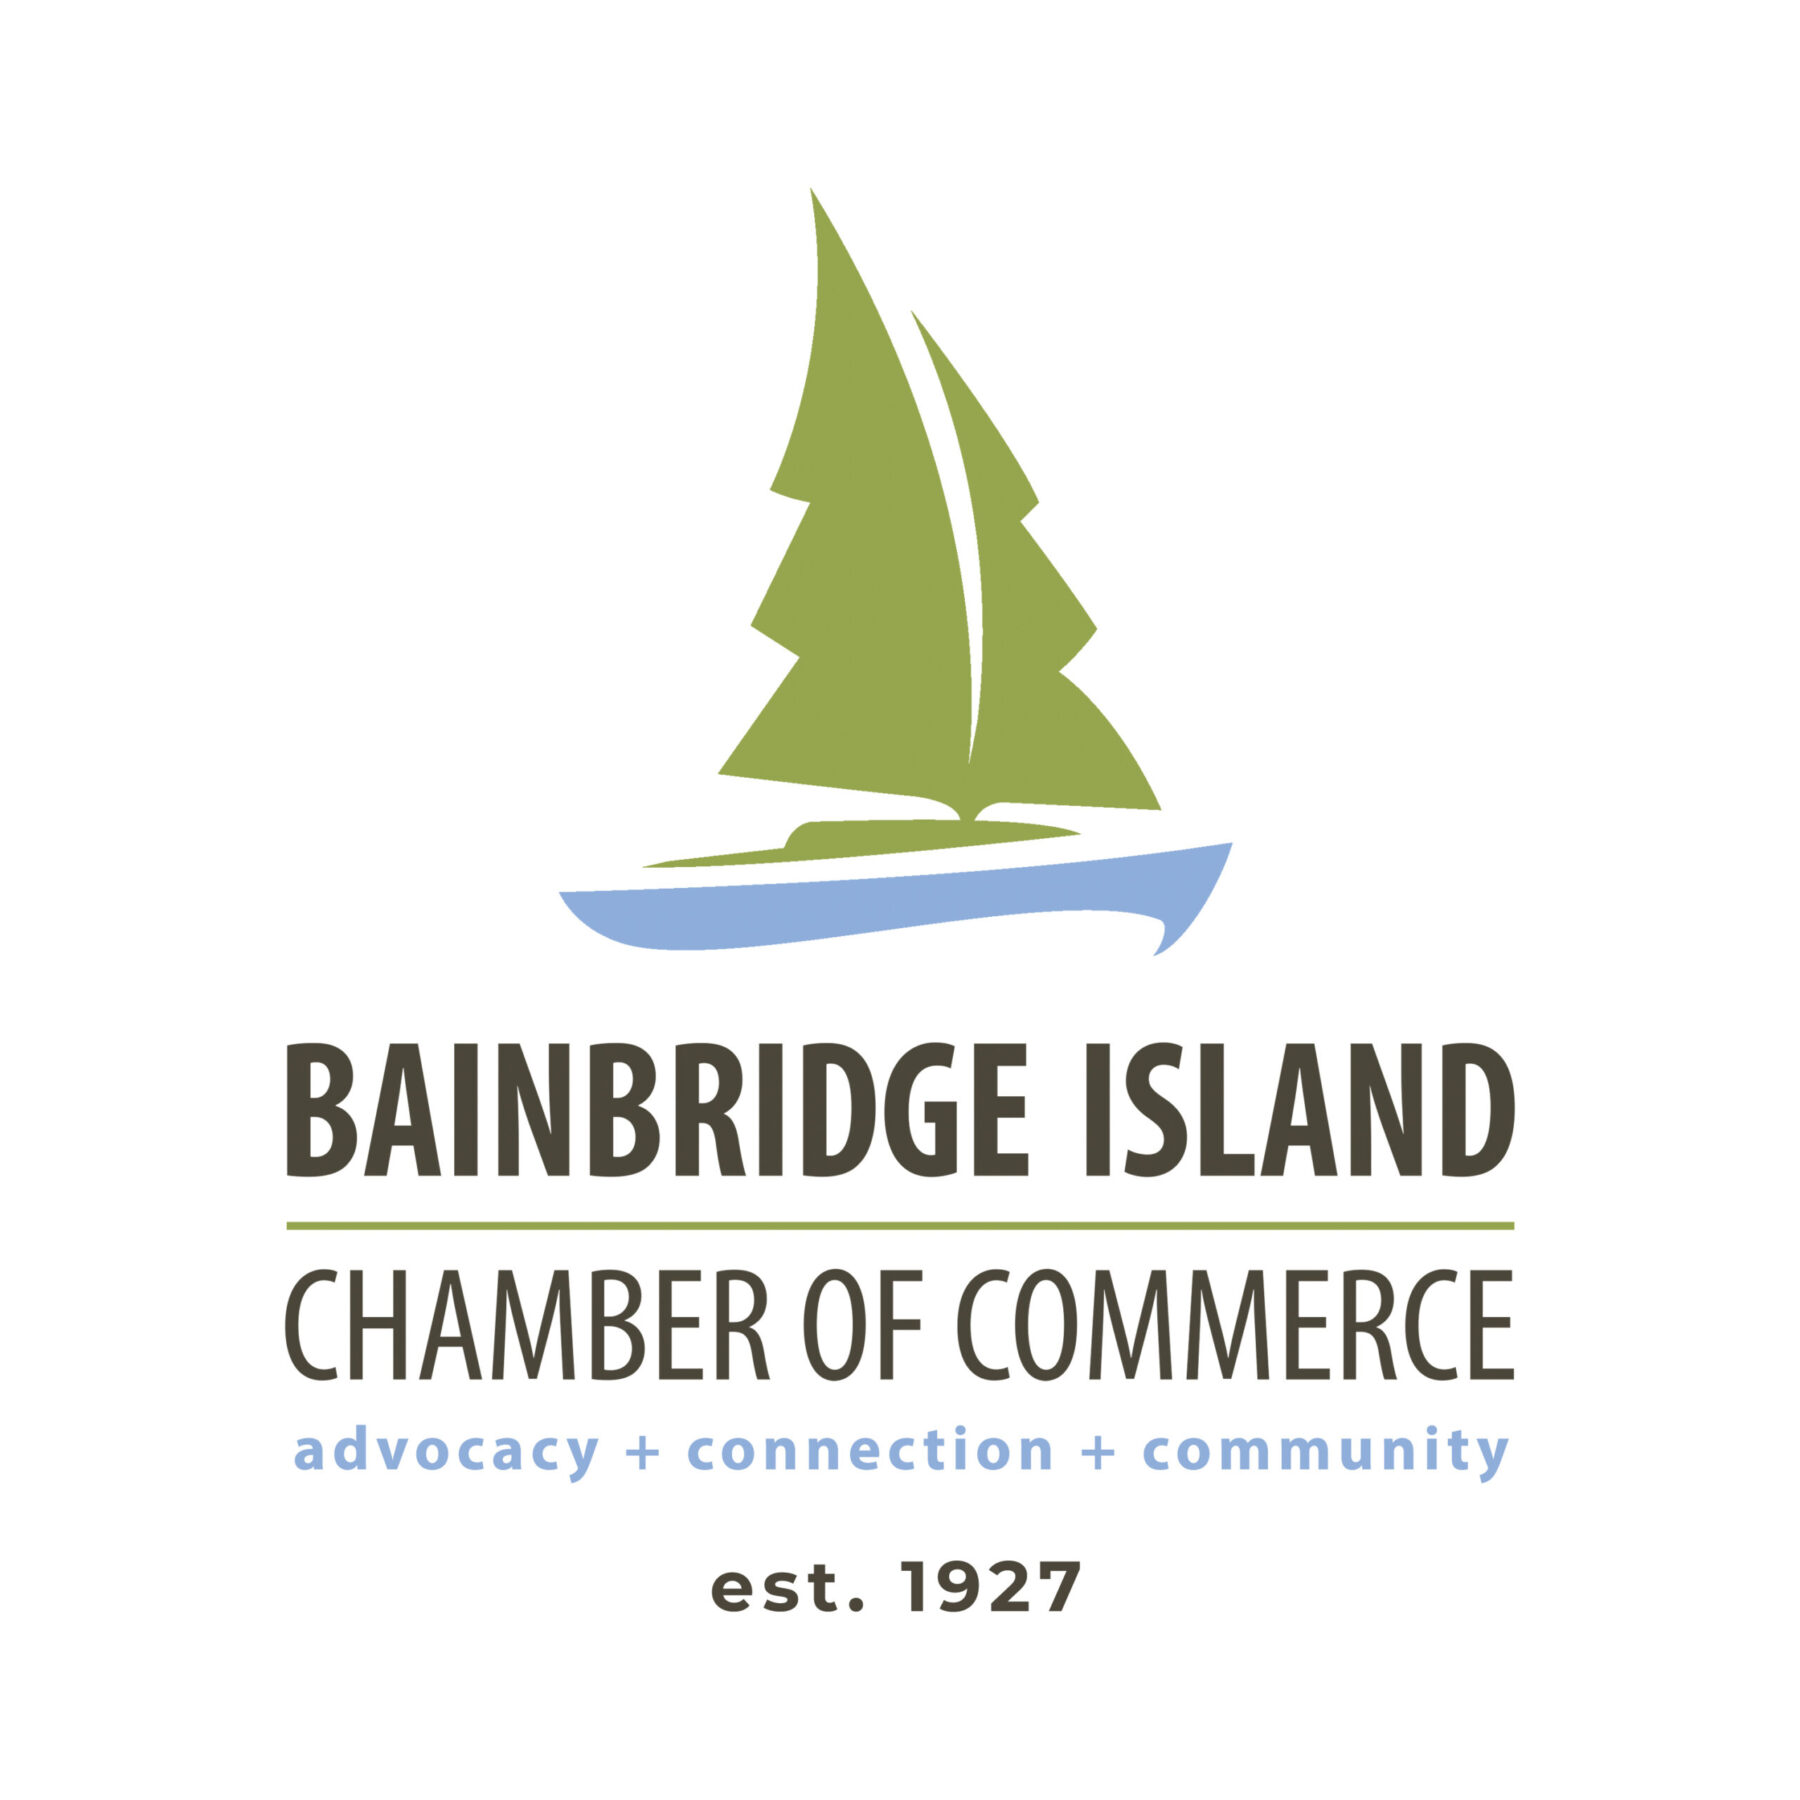 Bainbridge Island Chamber of Commerce - Advocacy Connection Community since 1927